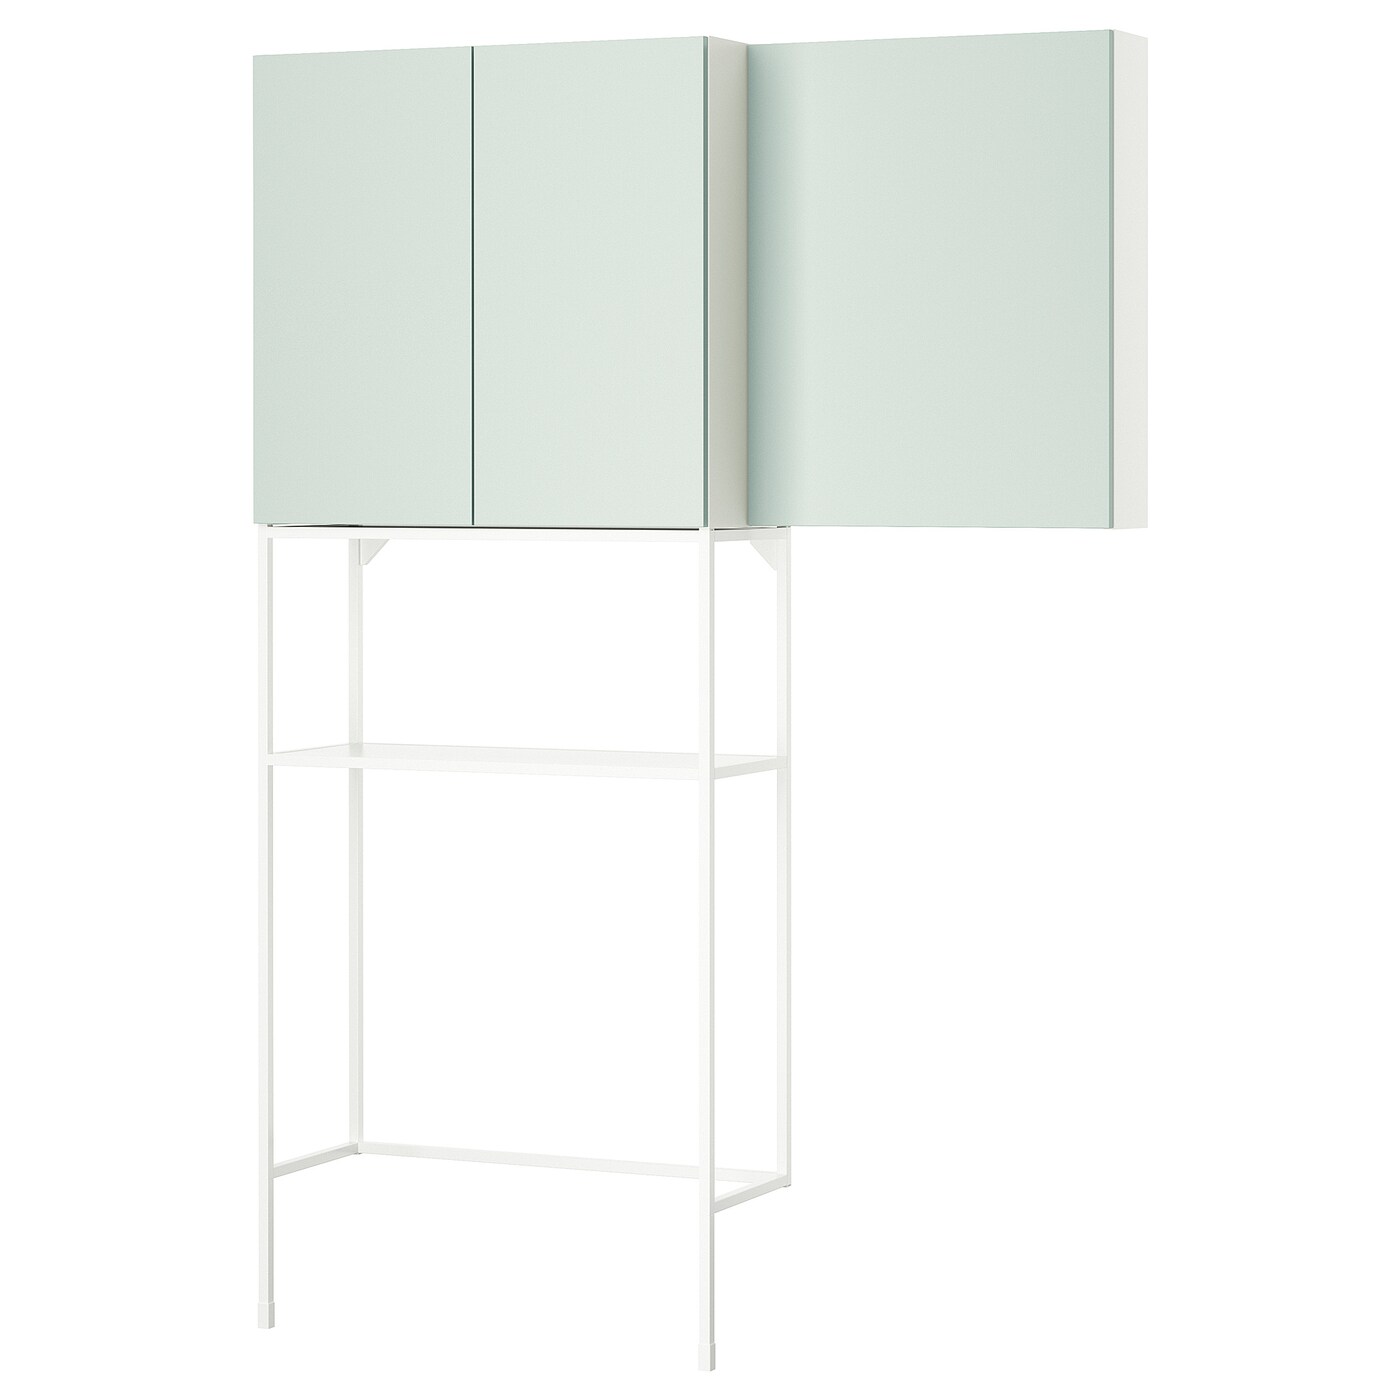 Книжный шкаф -  ENHET IKEA/ ЭНХЕТ ИКЕА, 204х140 см, белый/зеленый